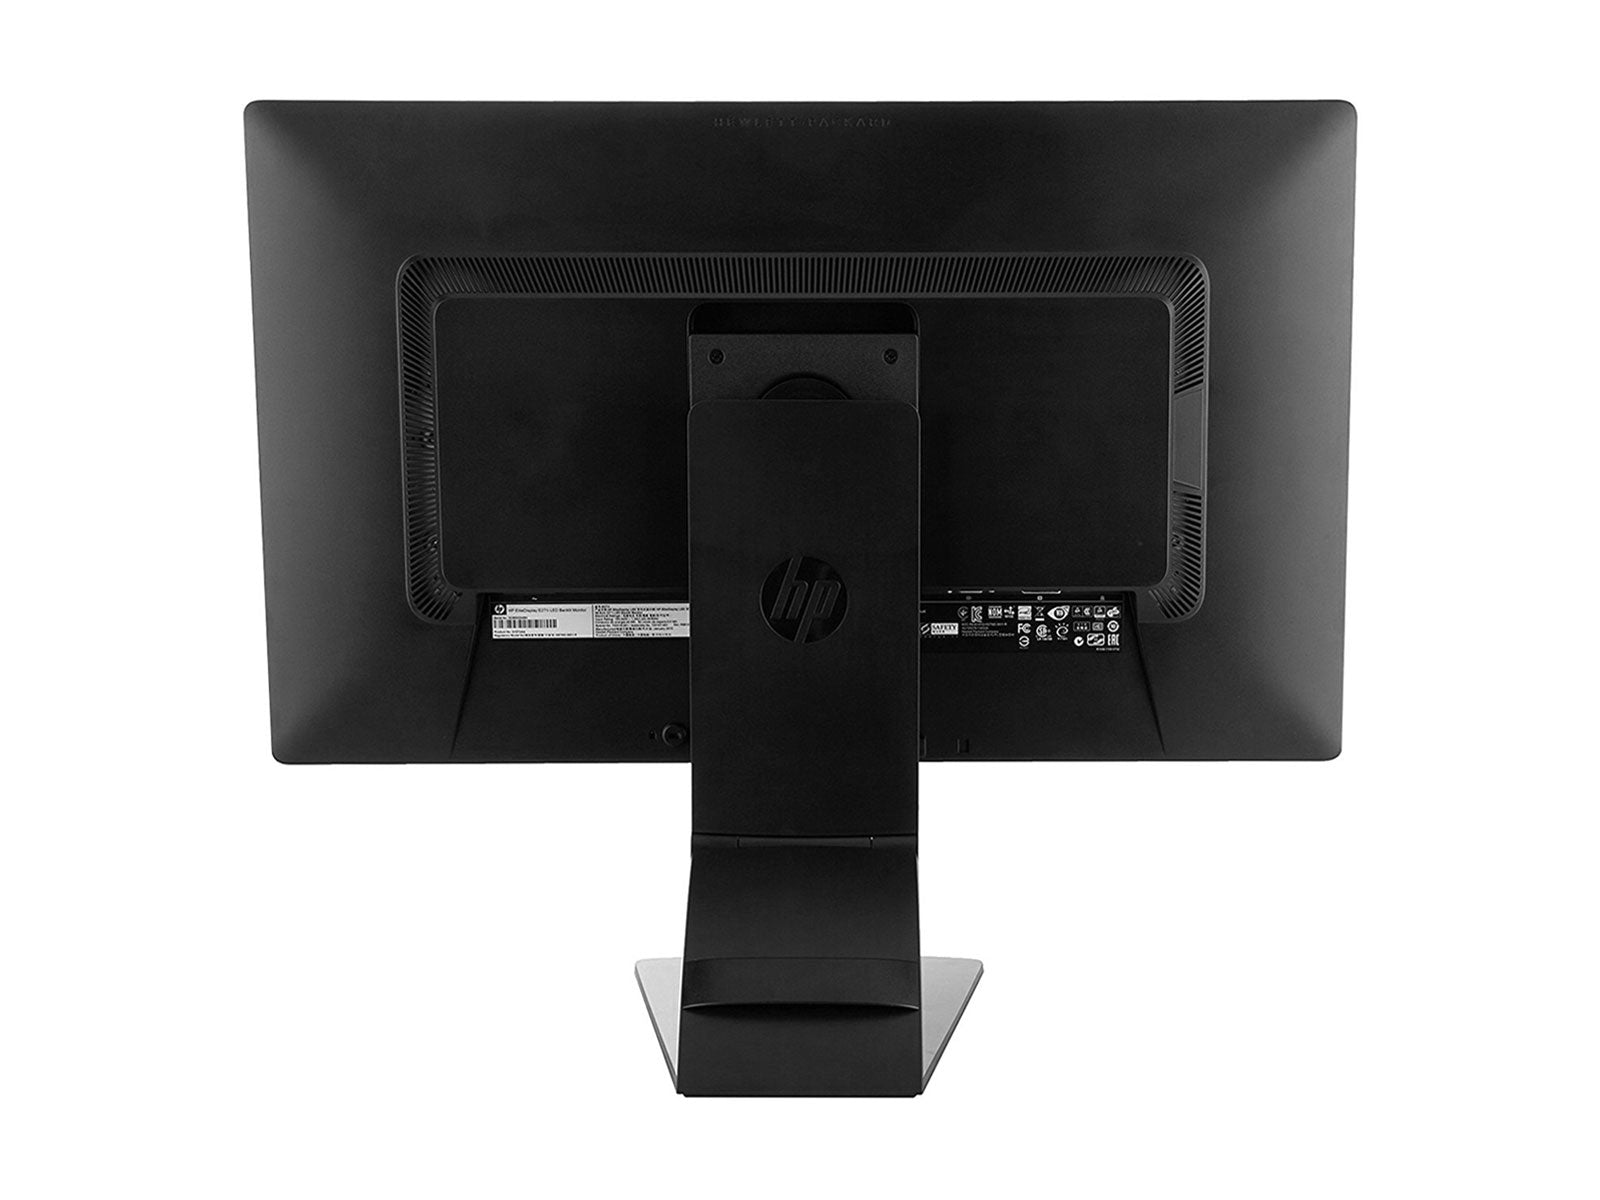 HP EliteDisplay e271i 27" FHD 1920 x 1080 LED Display Monitor (D7Z72A8#ABA) Monitors.com 